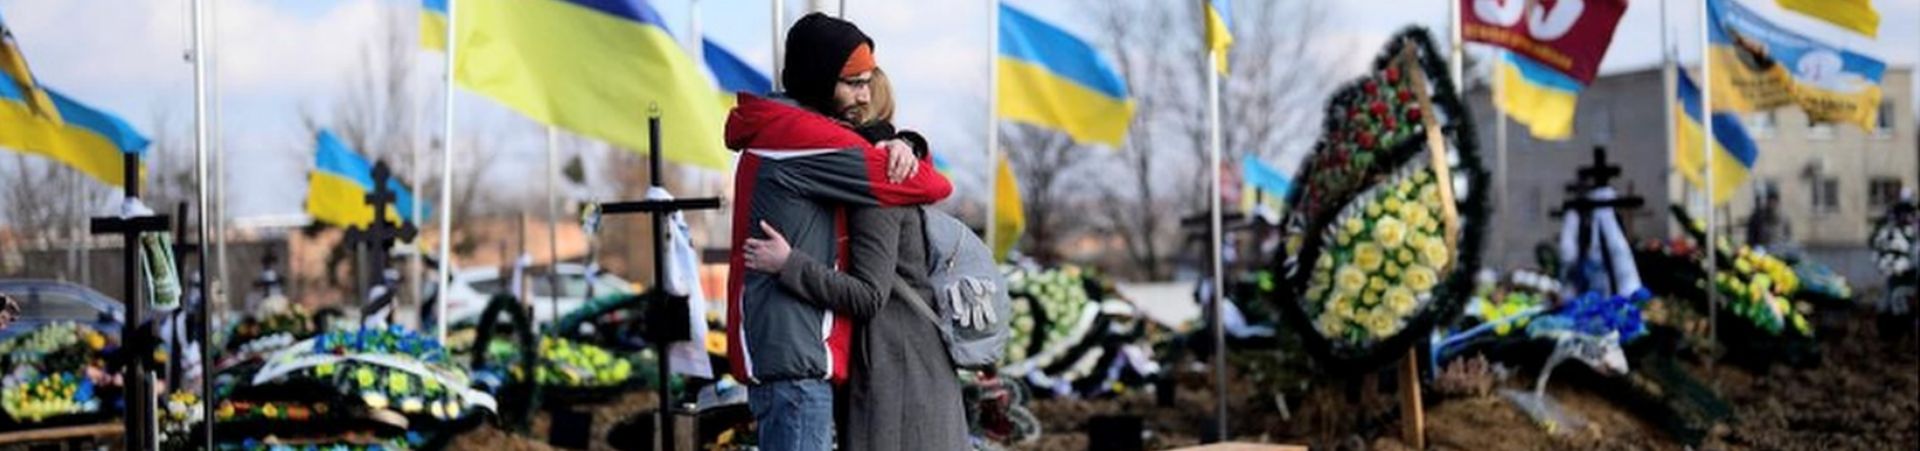 TEARS FOR UKRAINE